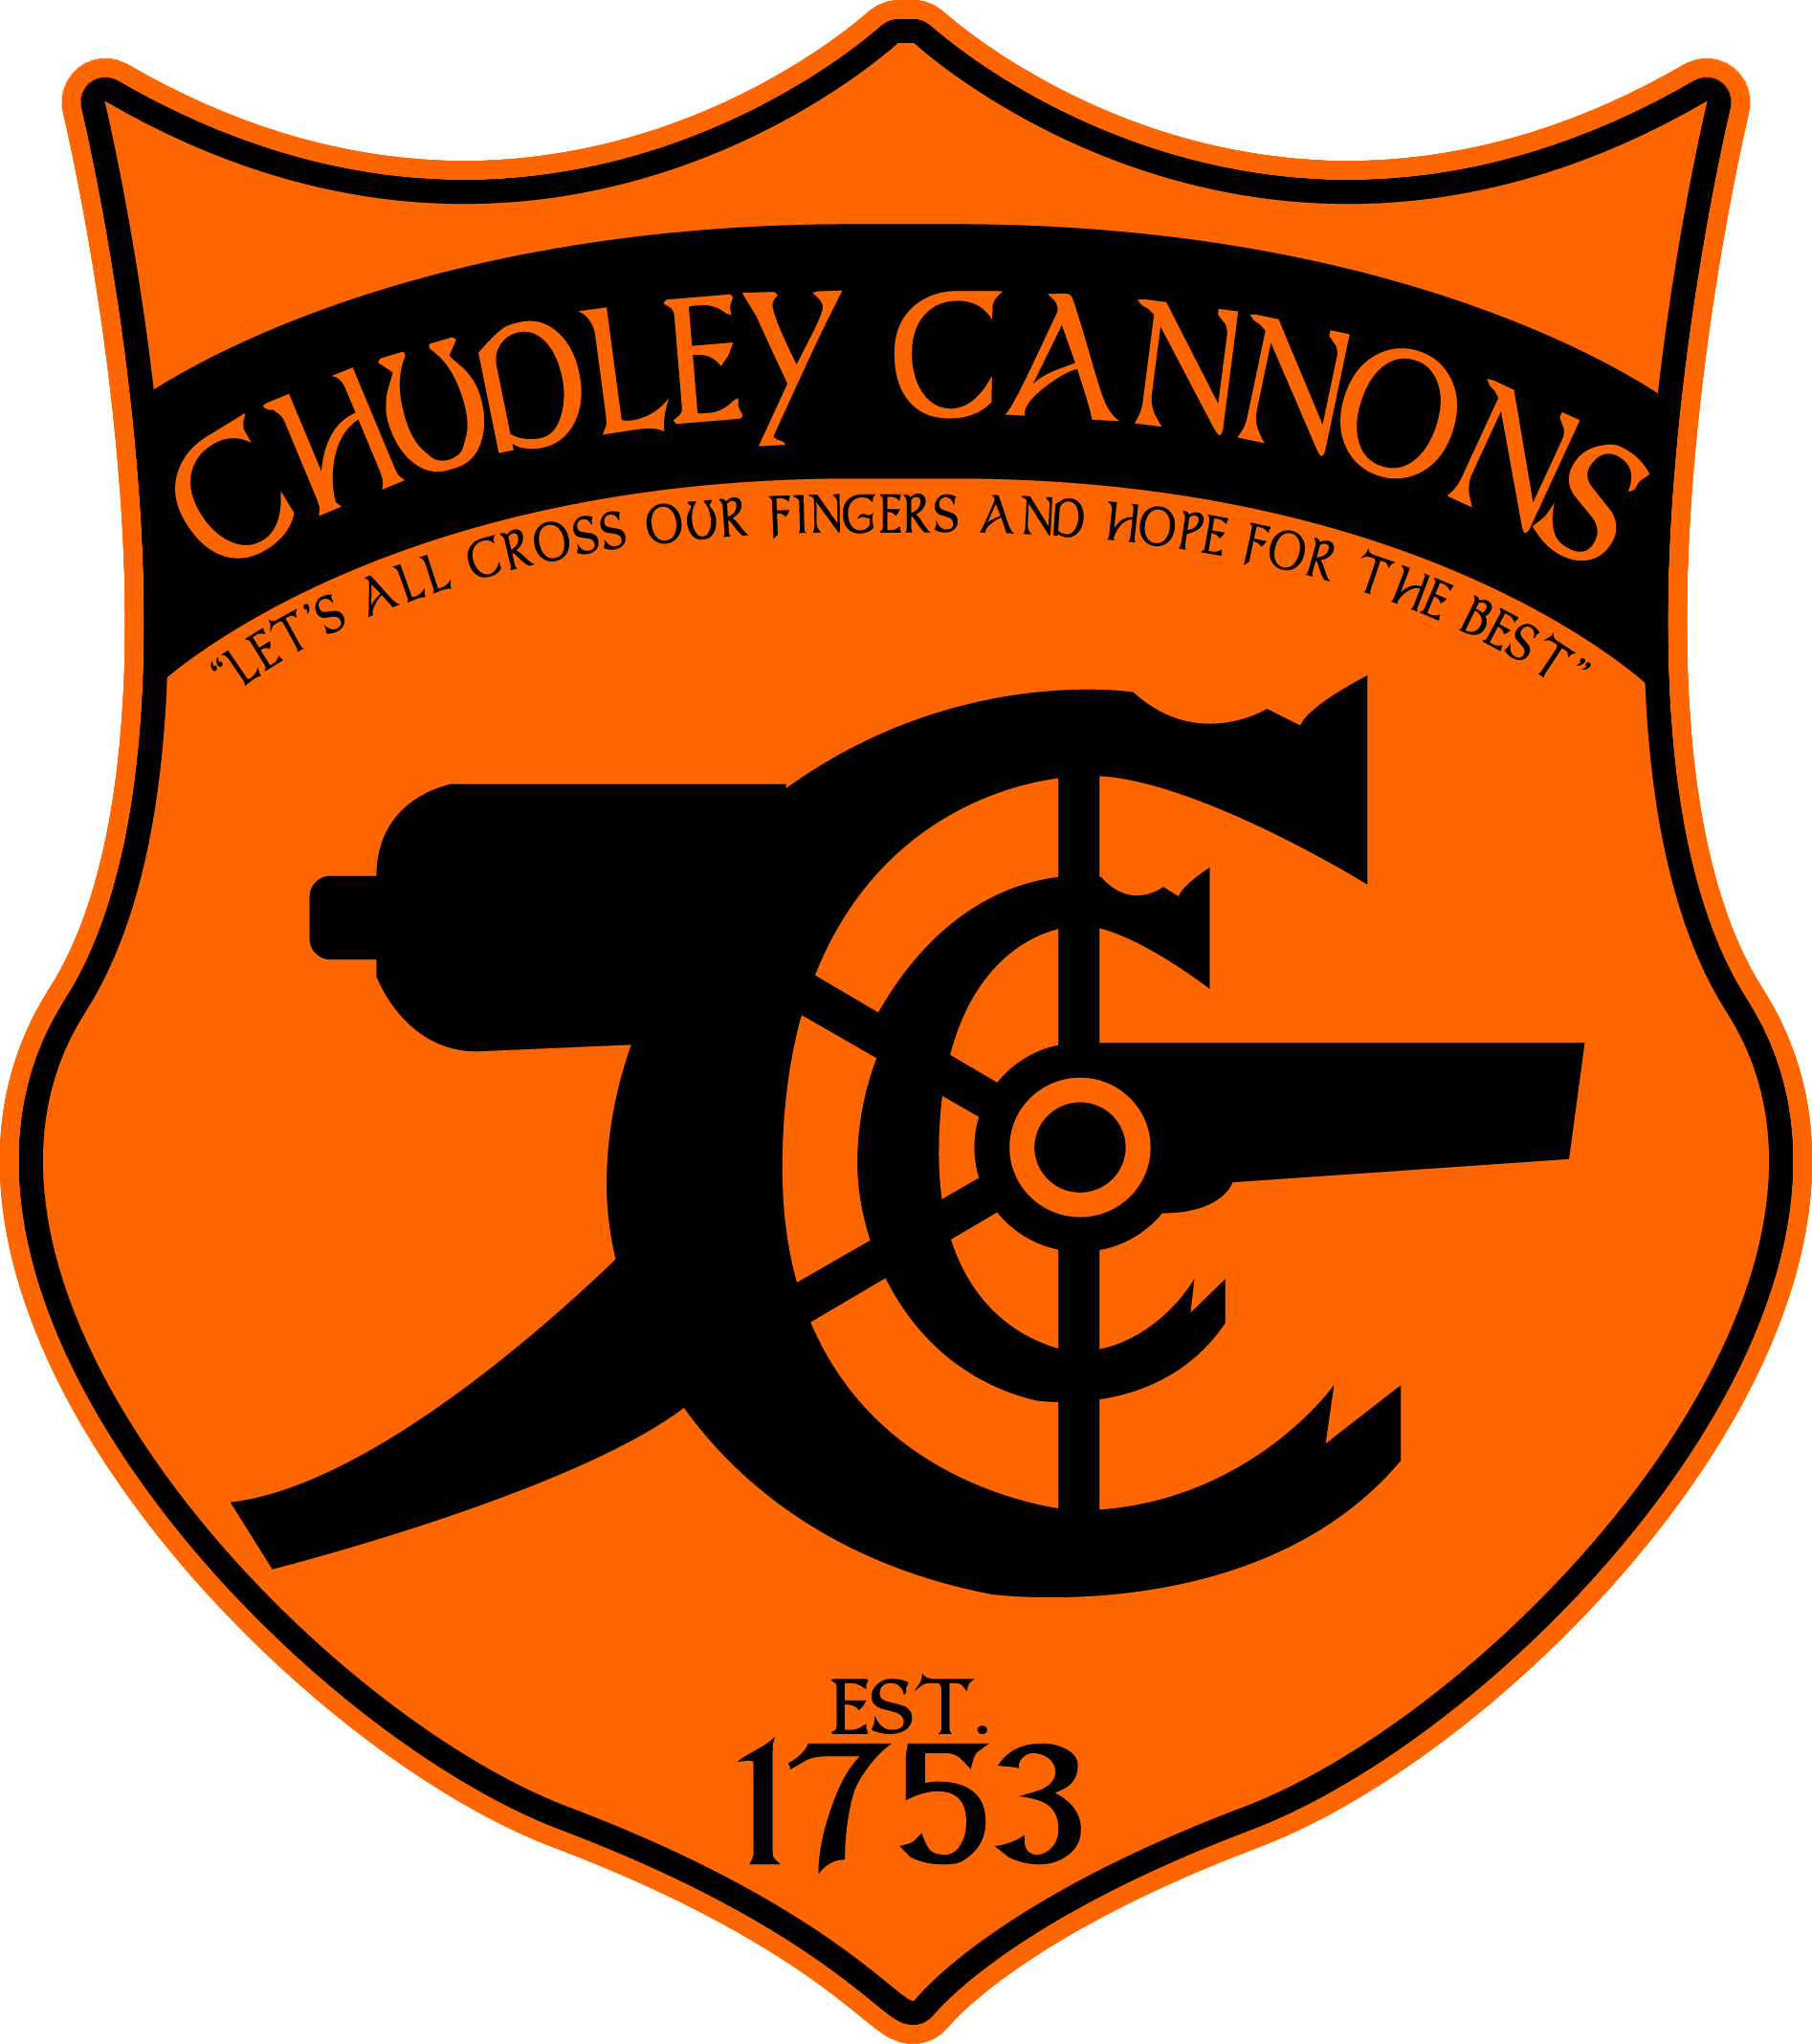 Chudley Cannons logo 1